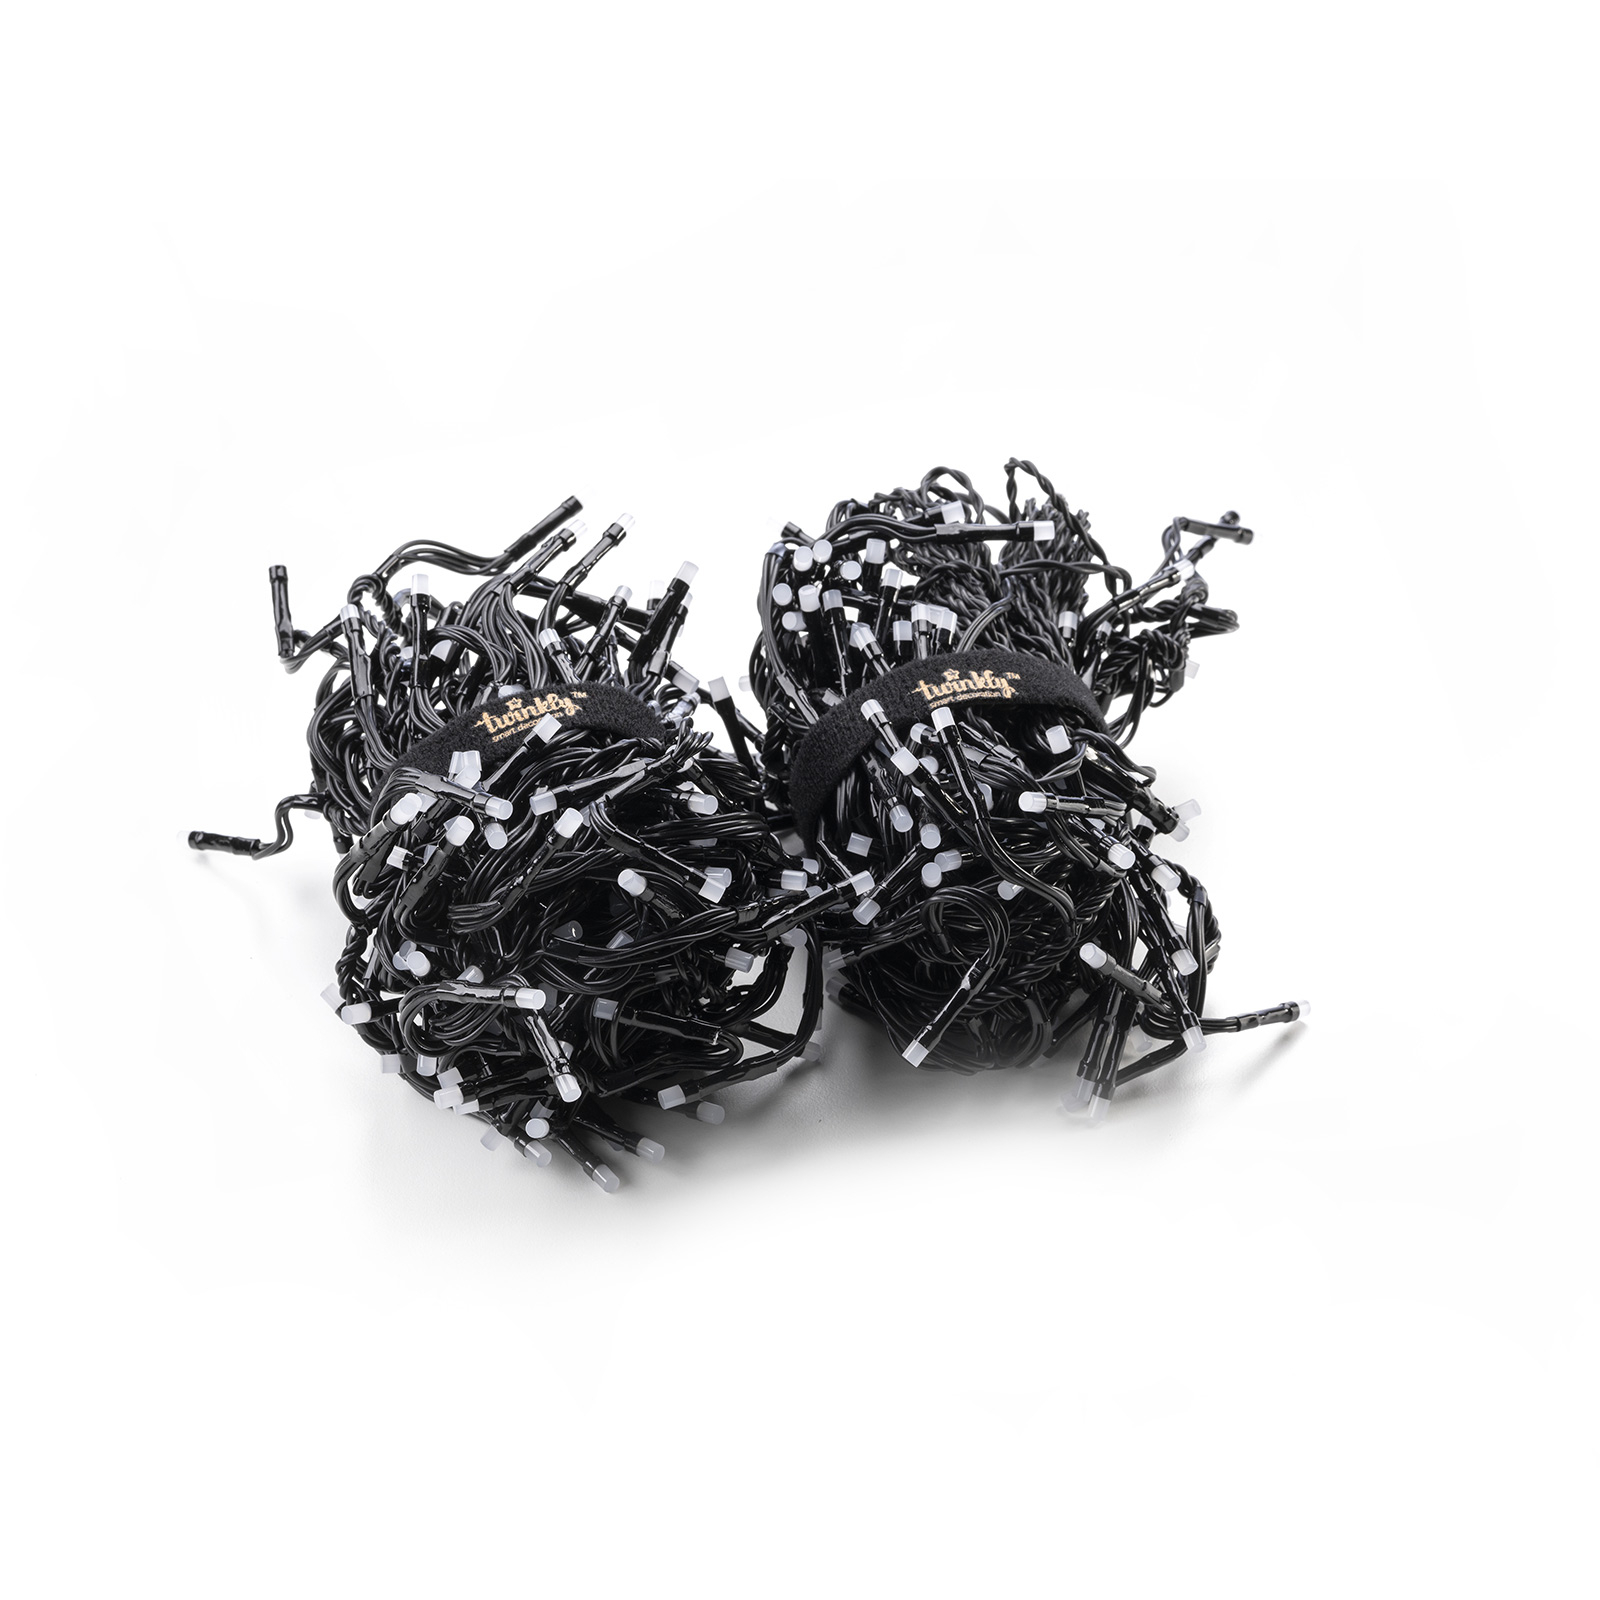 Cluster-Kette Twinkly RGB, schwarz, 400-flammig 6m